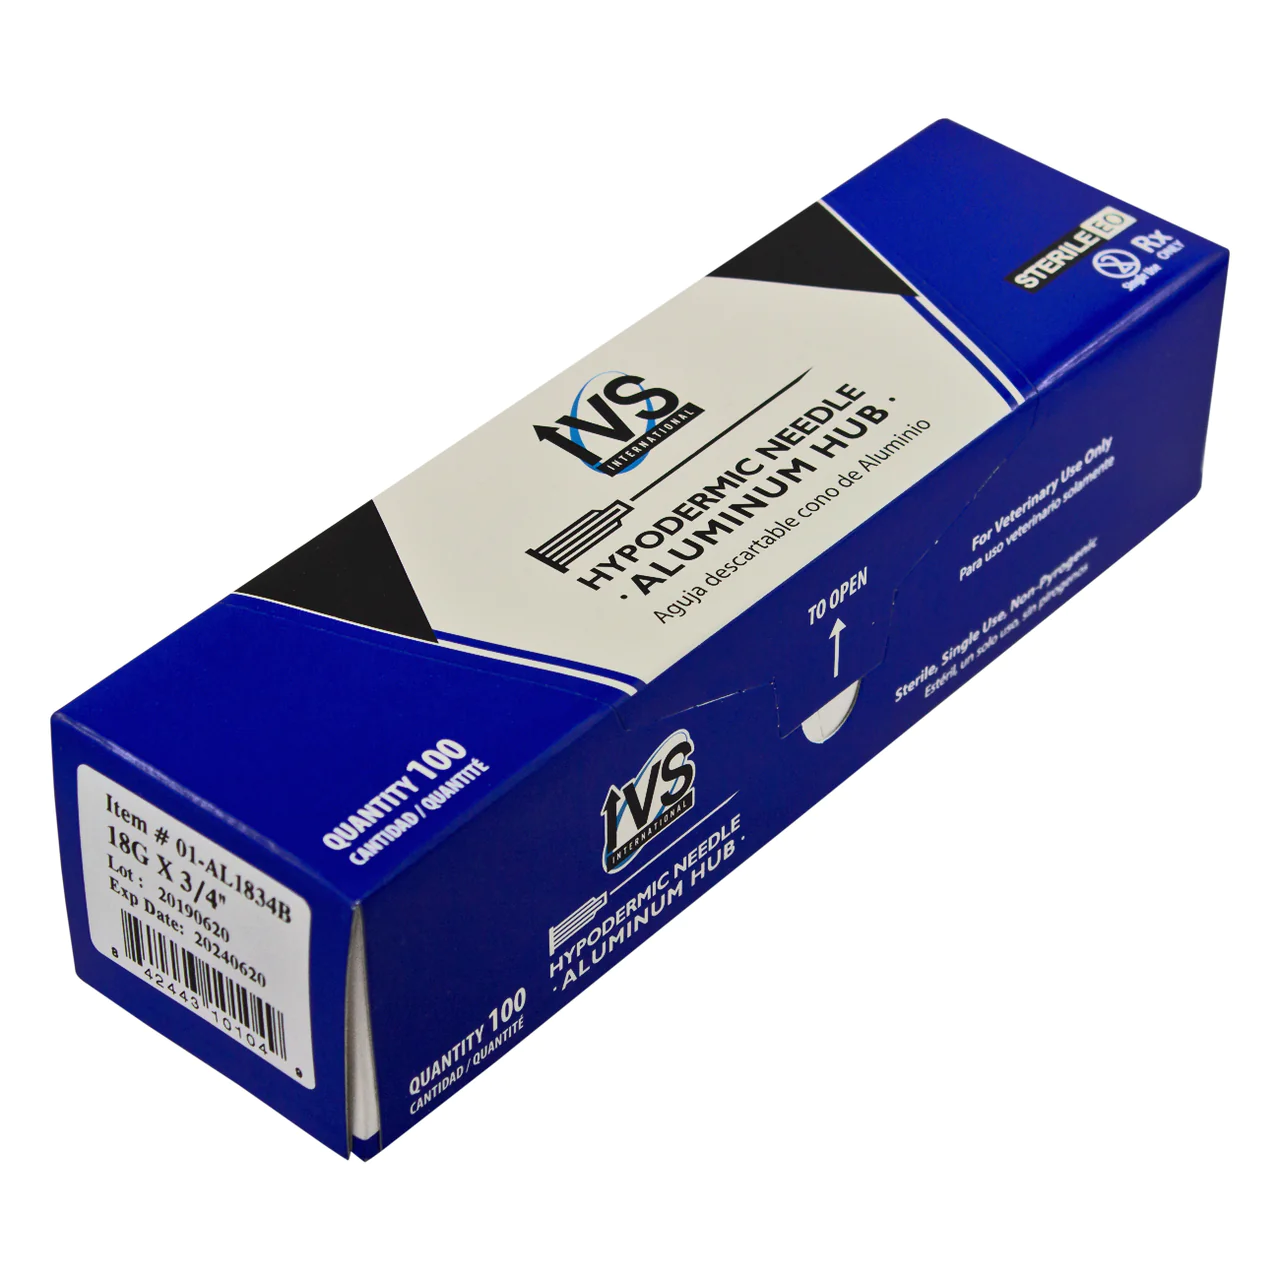 IVS Aluminum Hub Needle (100pk) - 18g x 3/4"